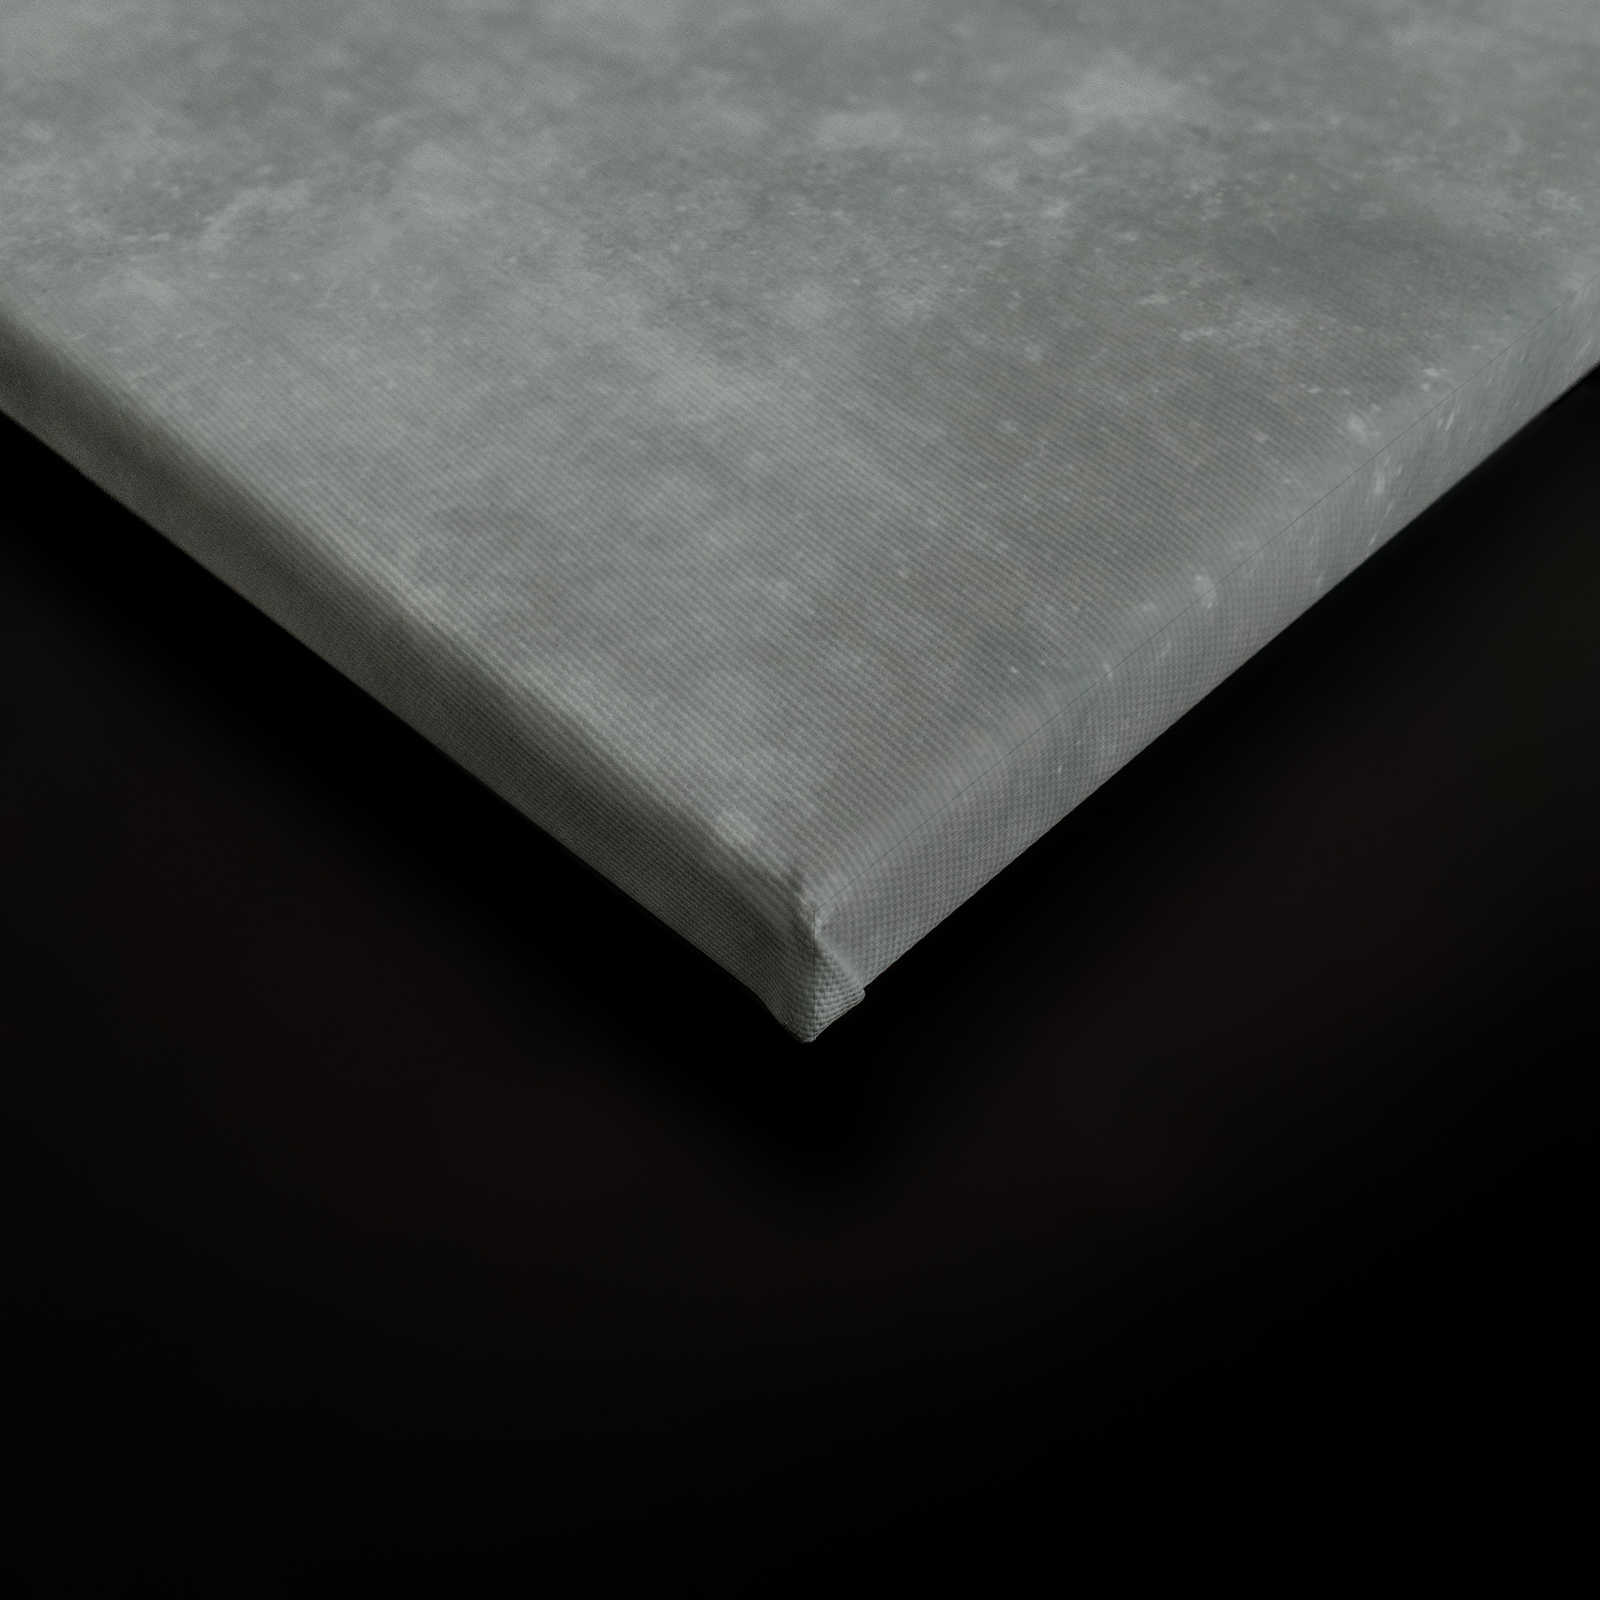             Concrete-look canvas picture with stripes | grey, blue - 0.90 m x 0.60 m
        